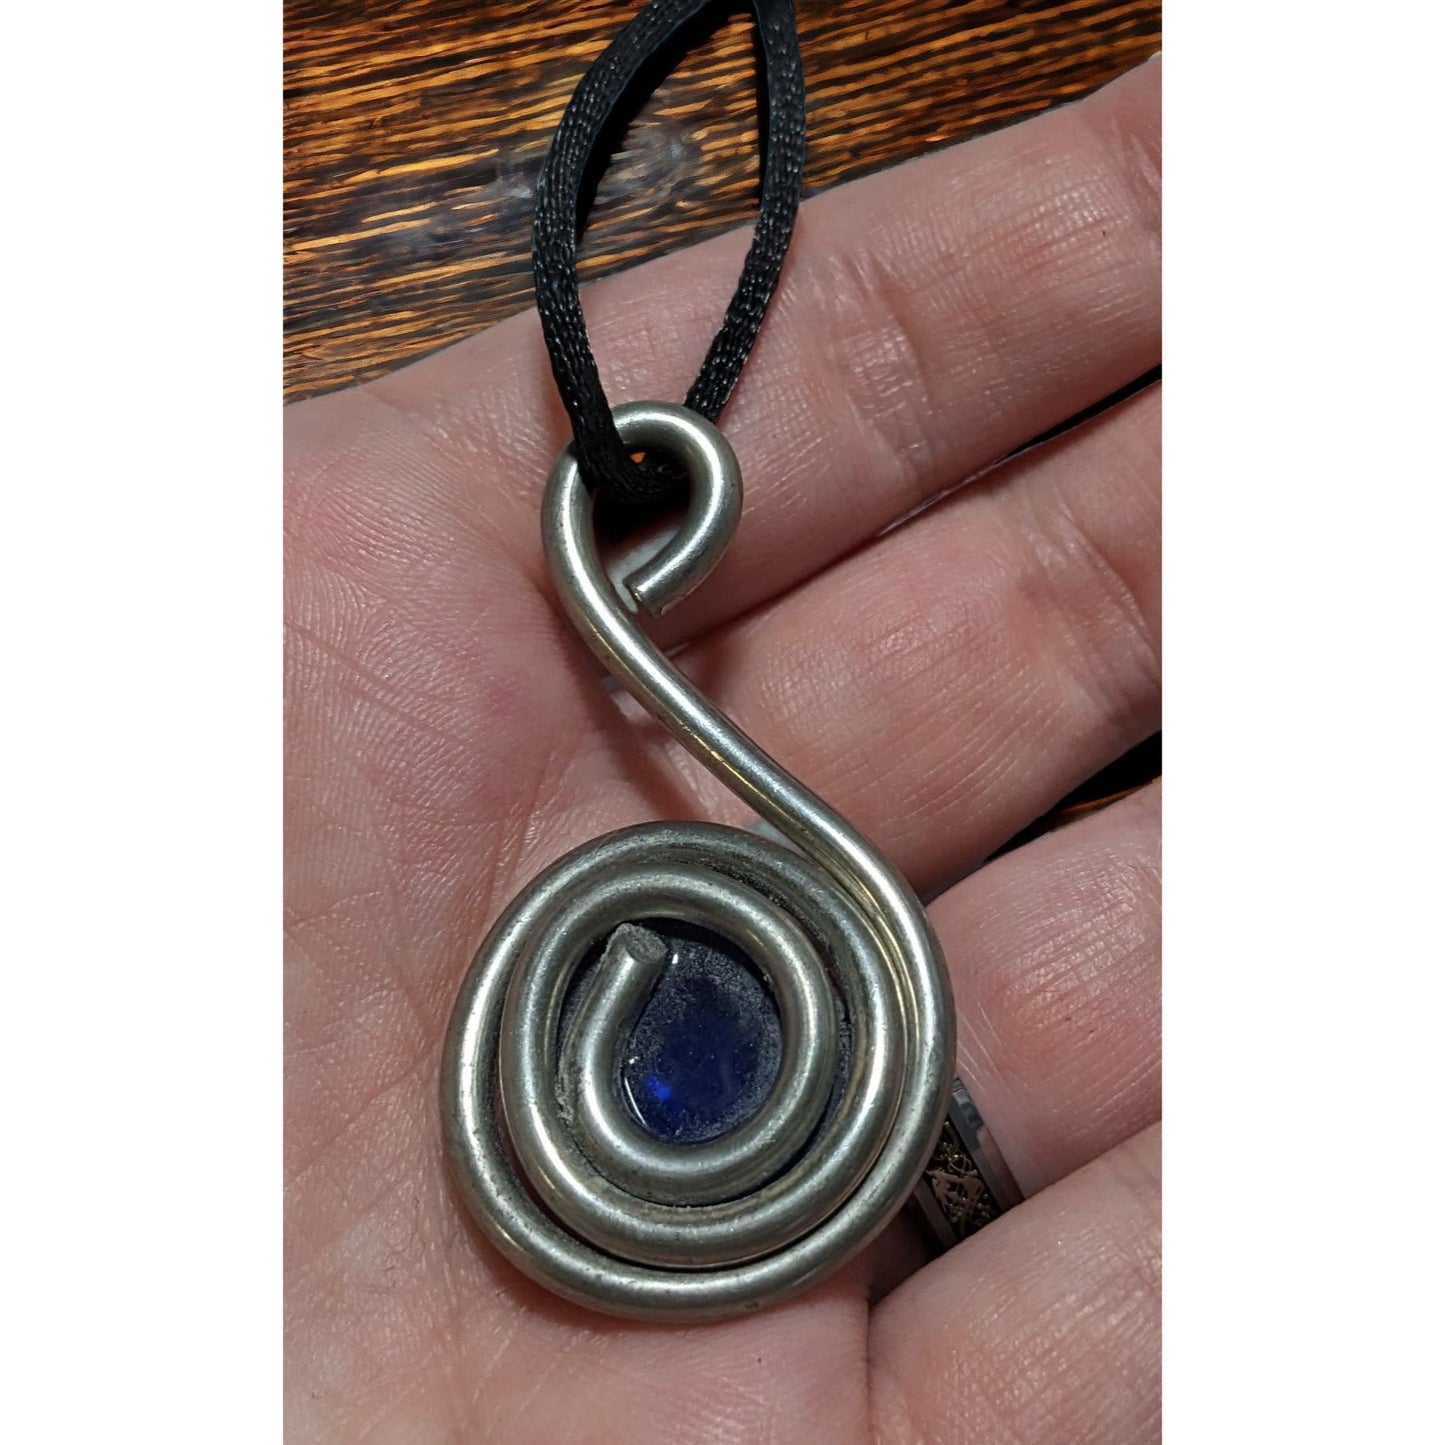 Cobalt Glass Swirl Necklace